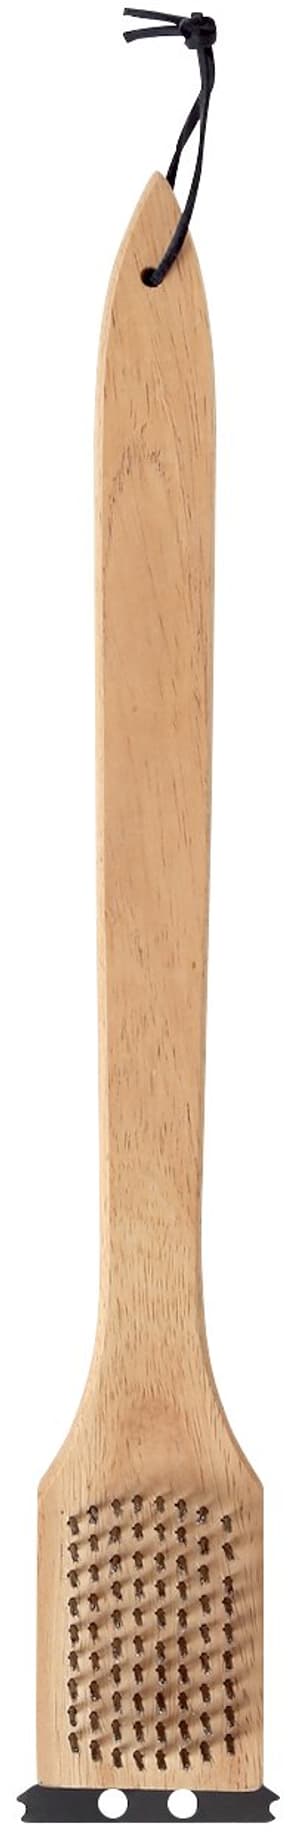 Grillbürste, Holz, 45 cm